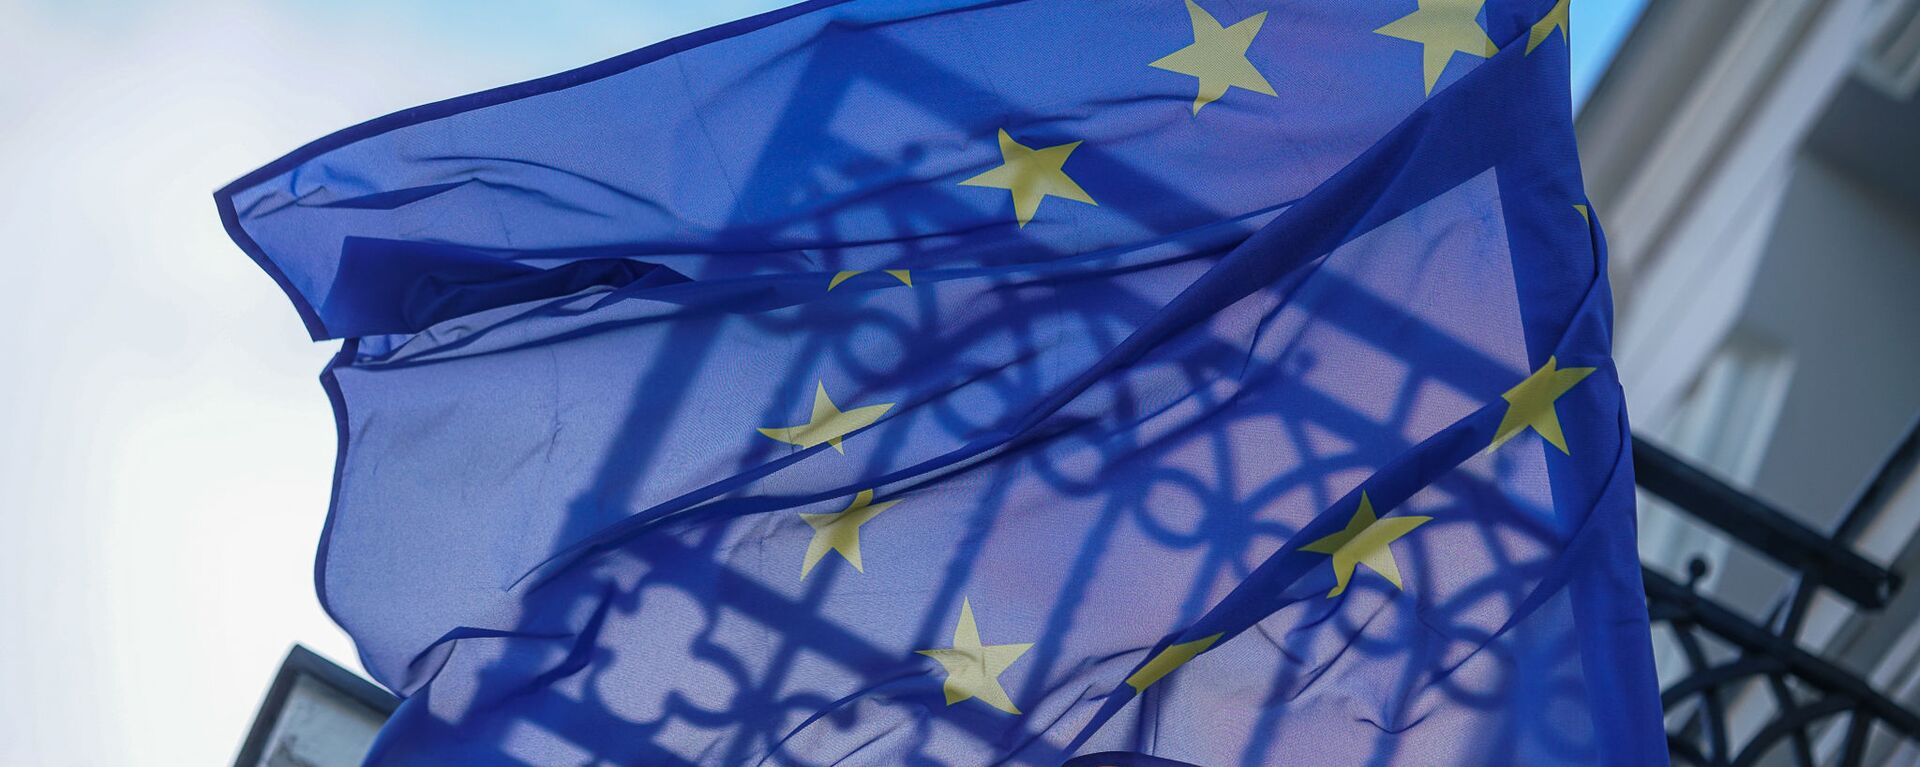 Флаг Евросоюза на здании в Риге - Sputnik Latvija, 1920, 06.10.2021